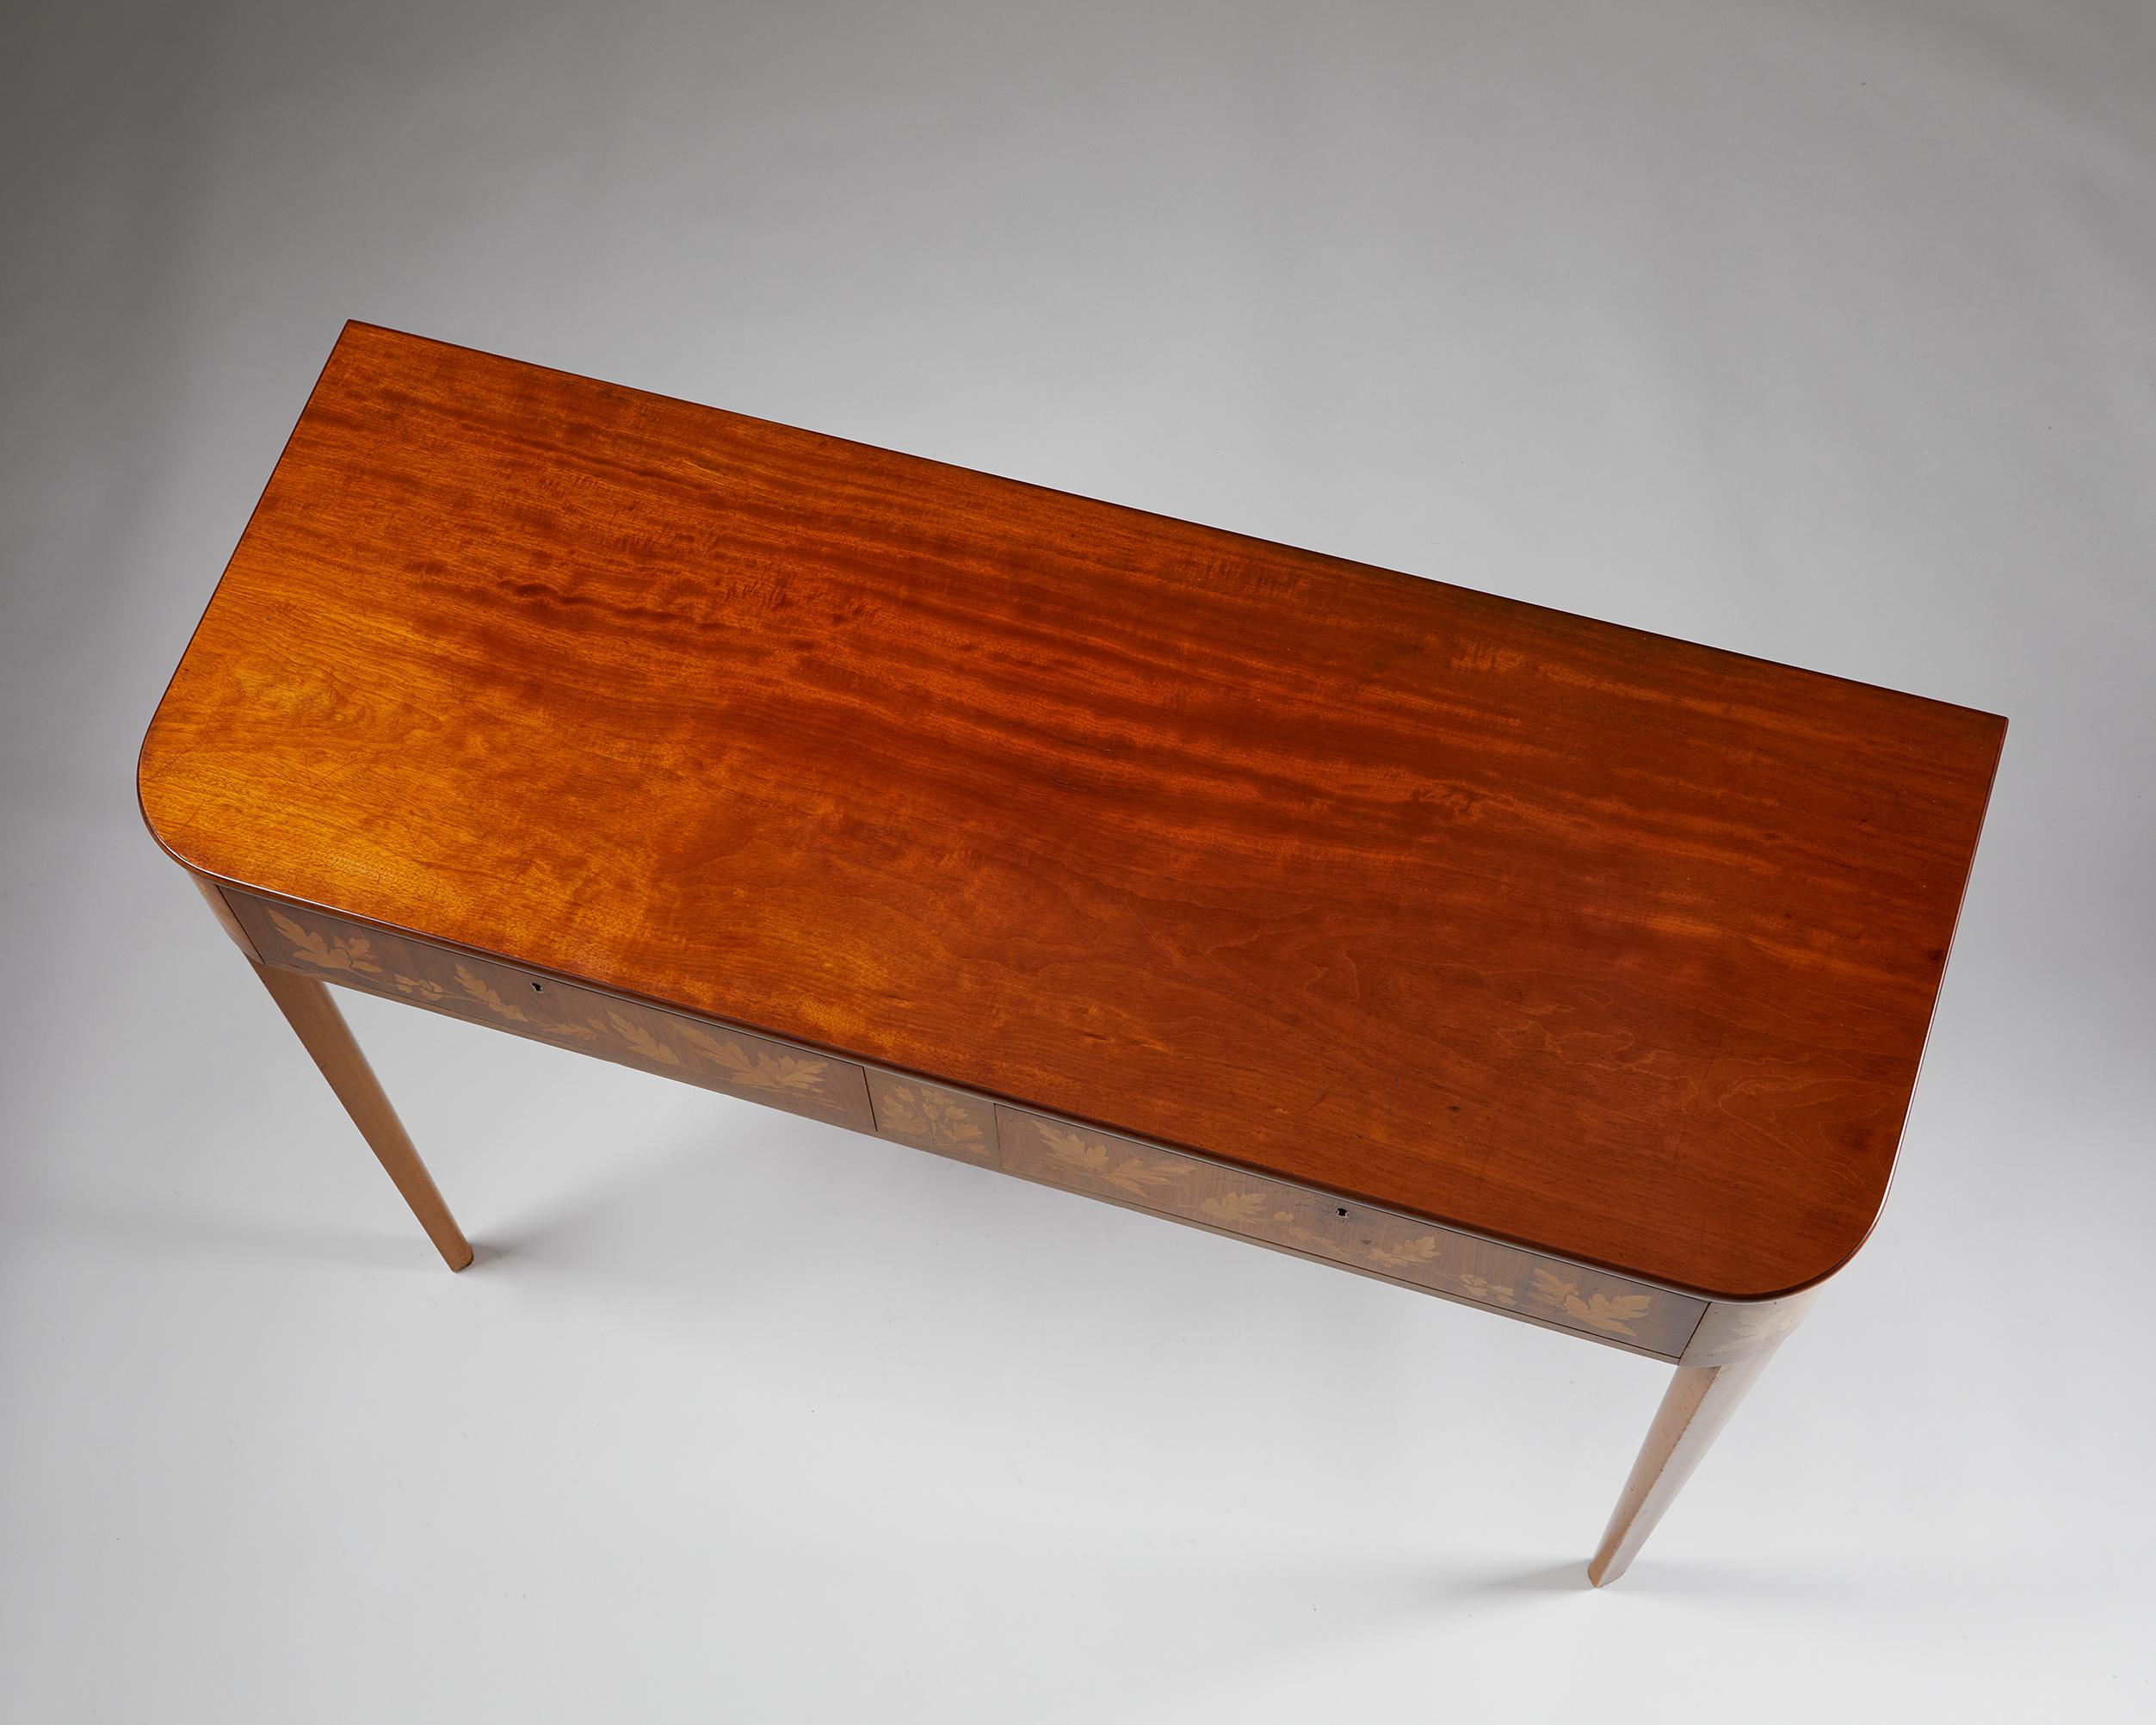 Small Desk / Side Table “Guanabara” Designed by Carl Malmsten, Sweden, 1950’s 1